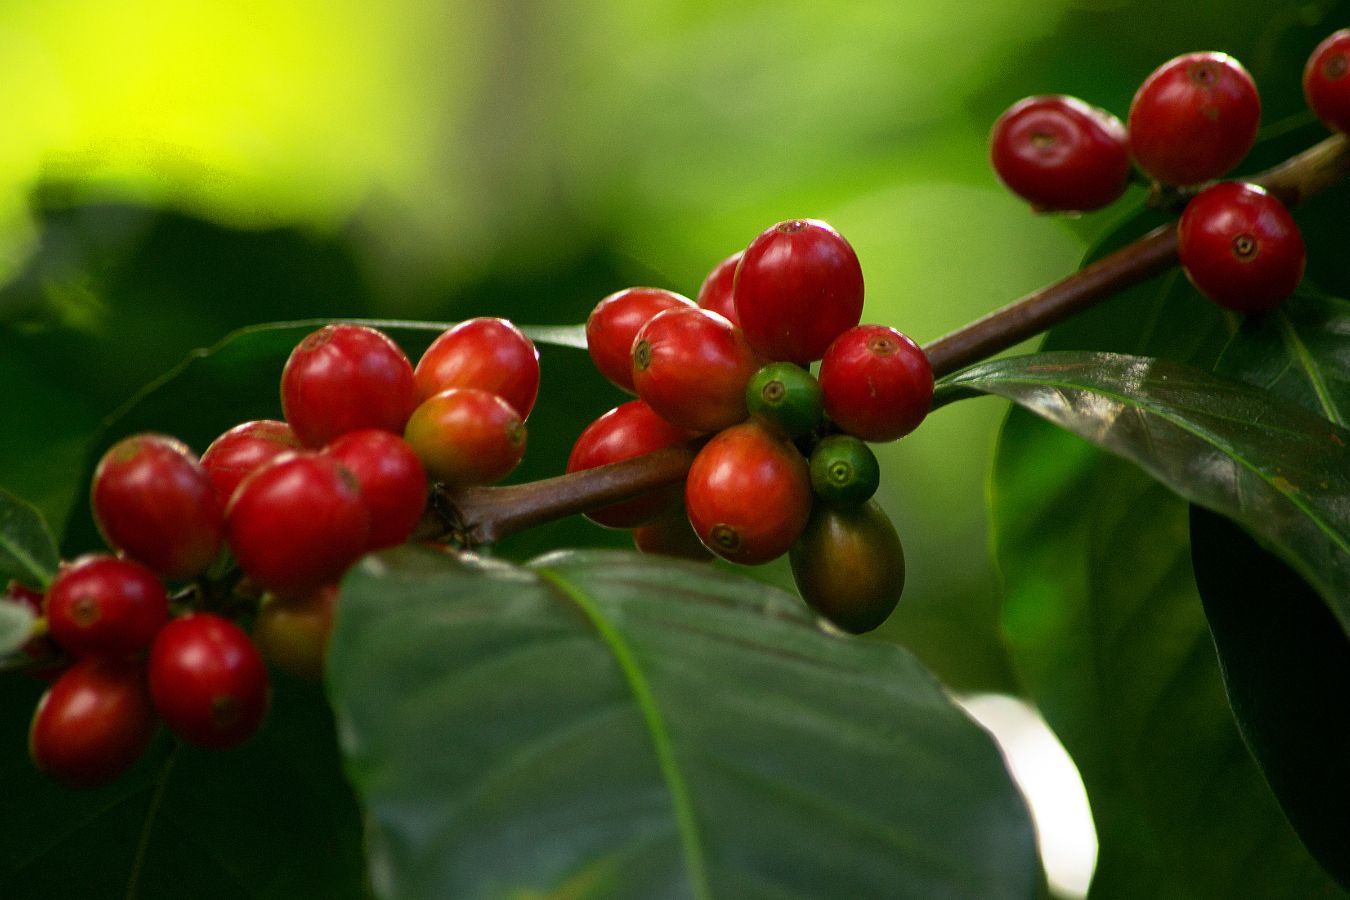 Coffee Price Today - October 11, 2022 - Helena Coffee Vietnam